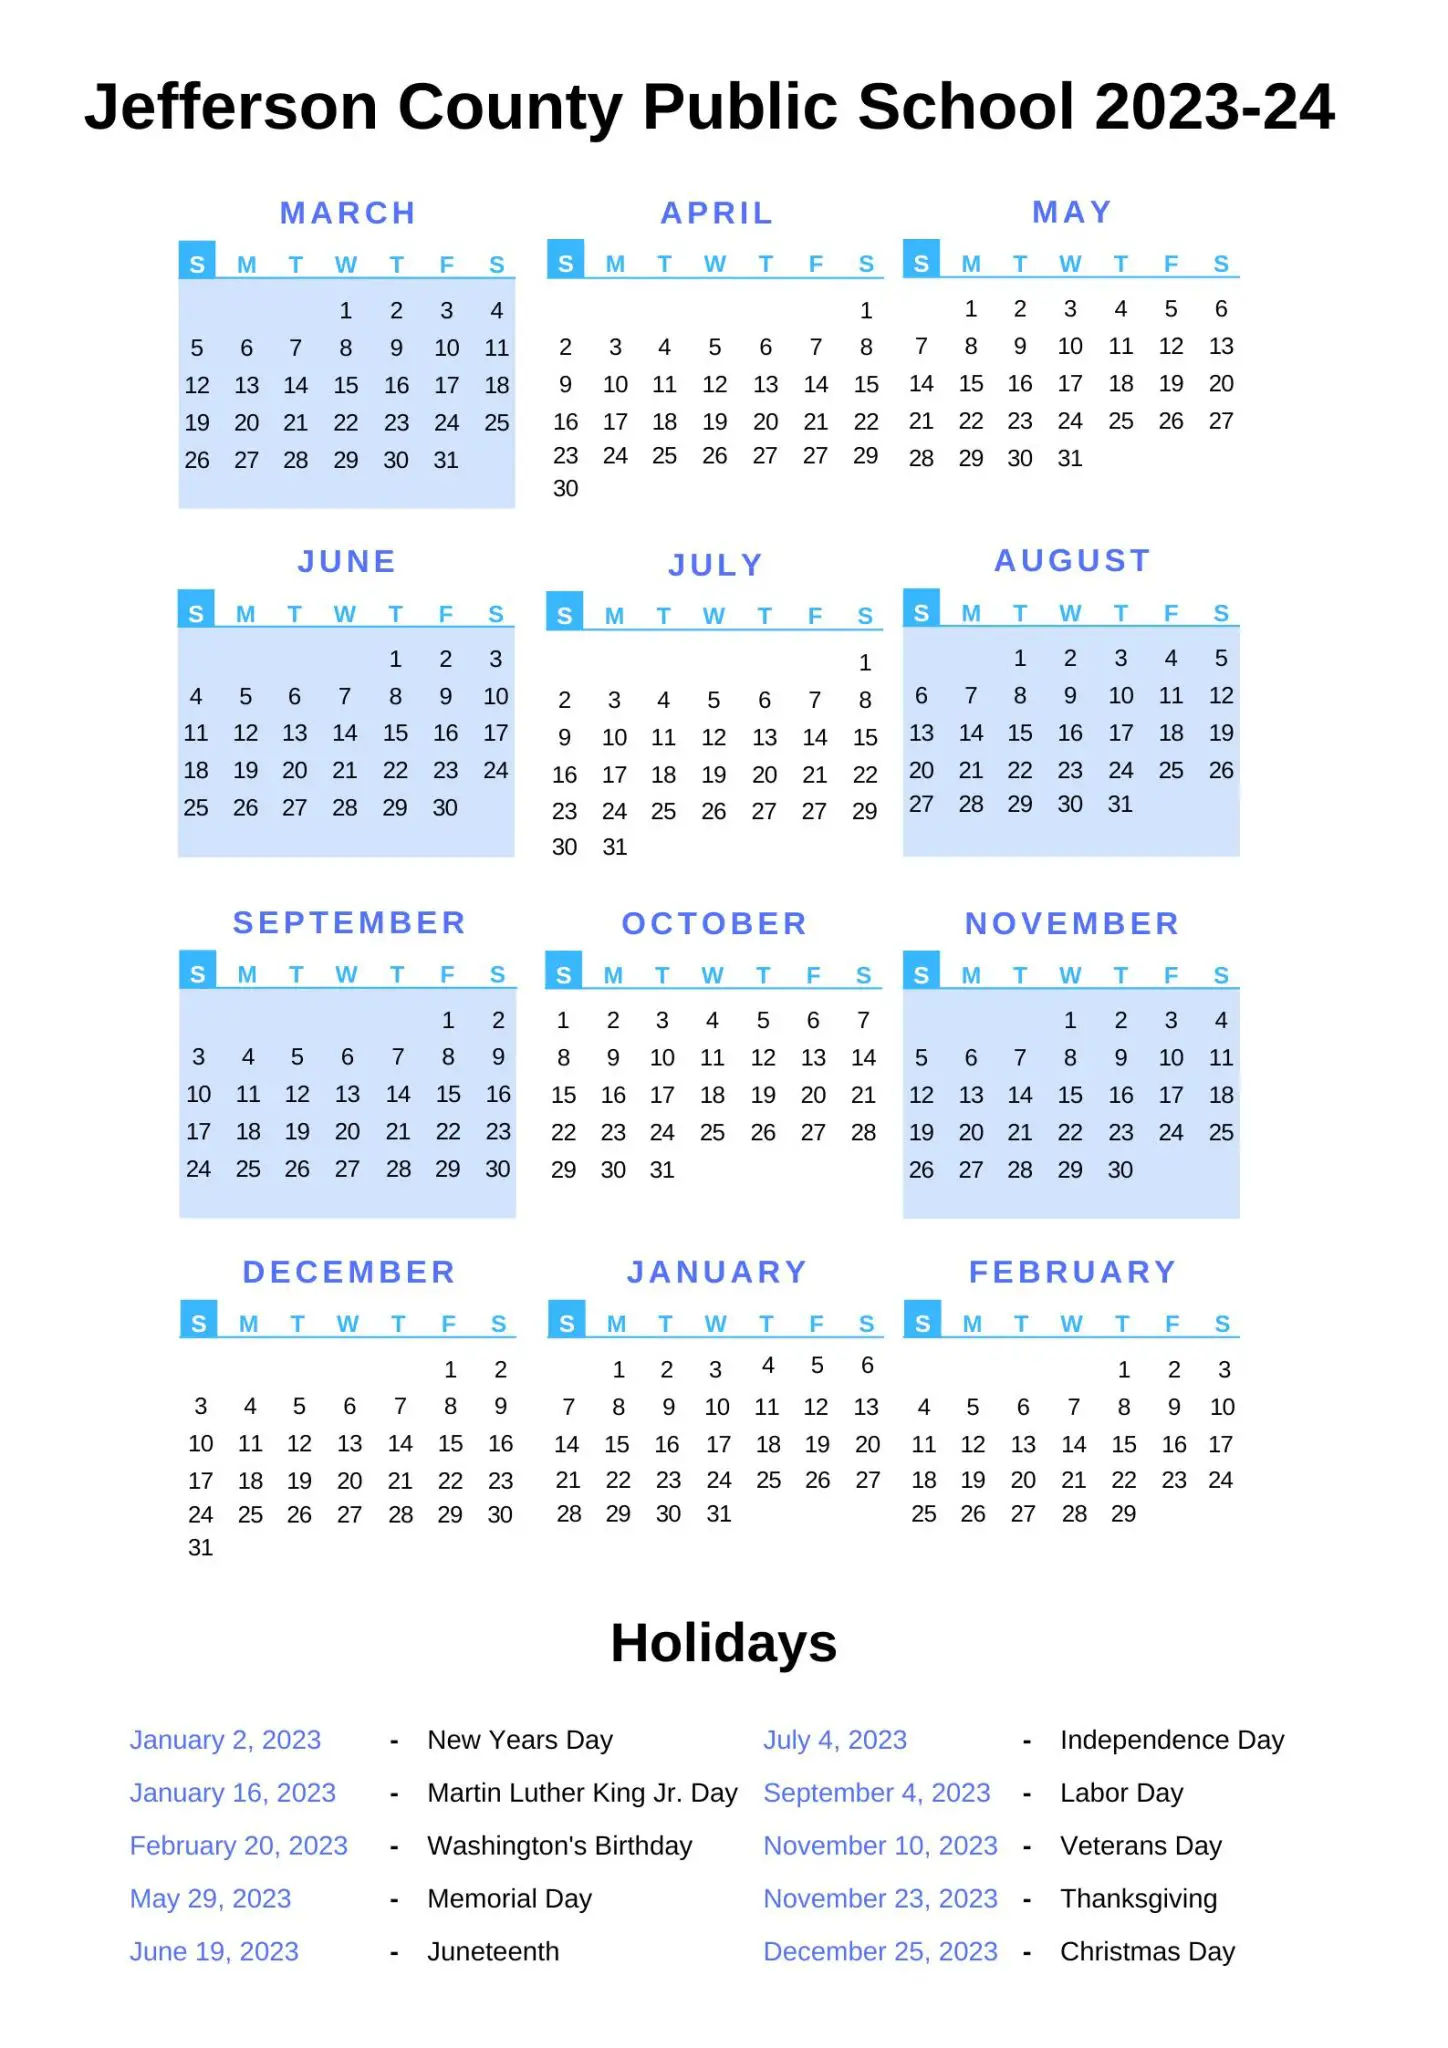 Jefferson County Public Schools Calendar 202324 with Holidays